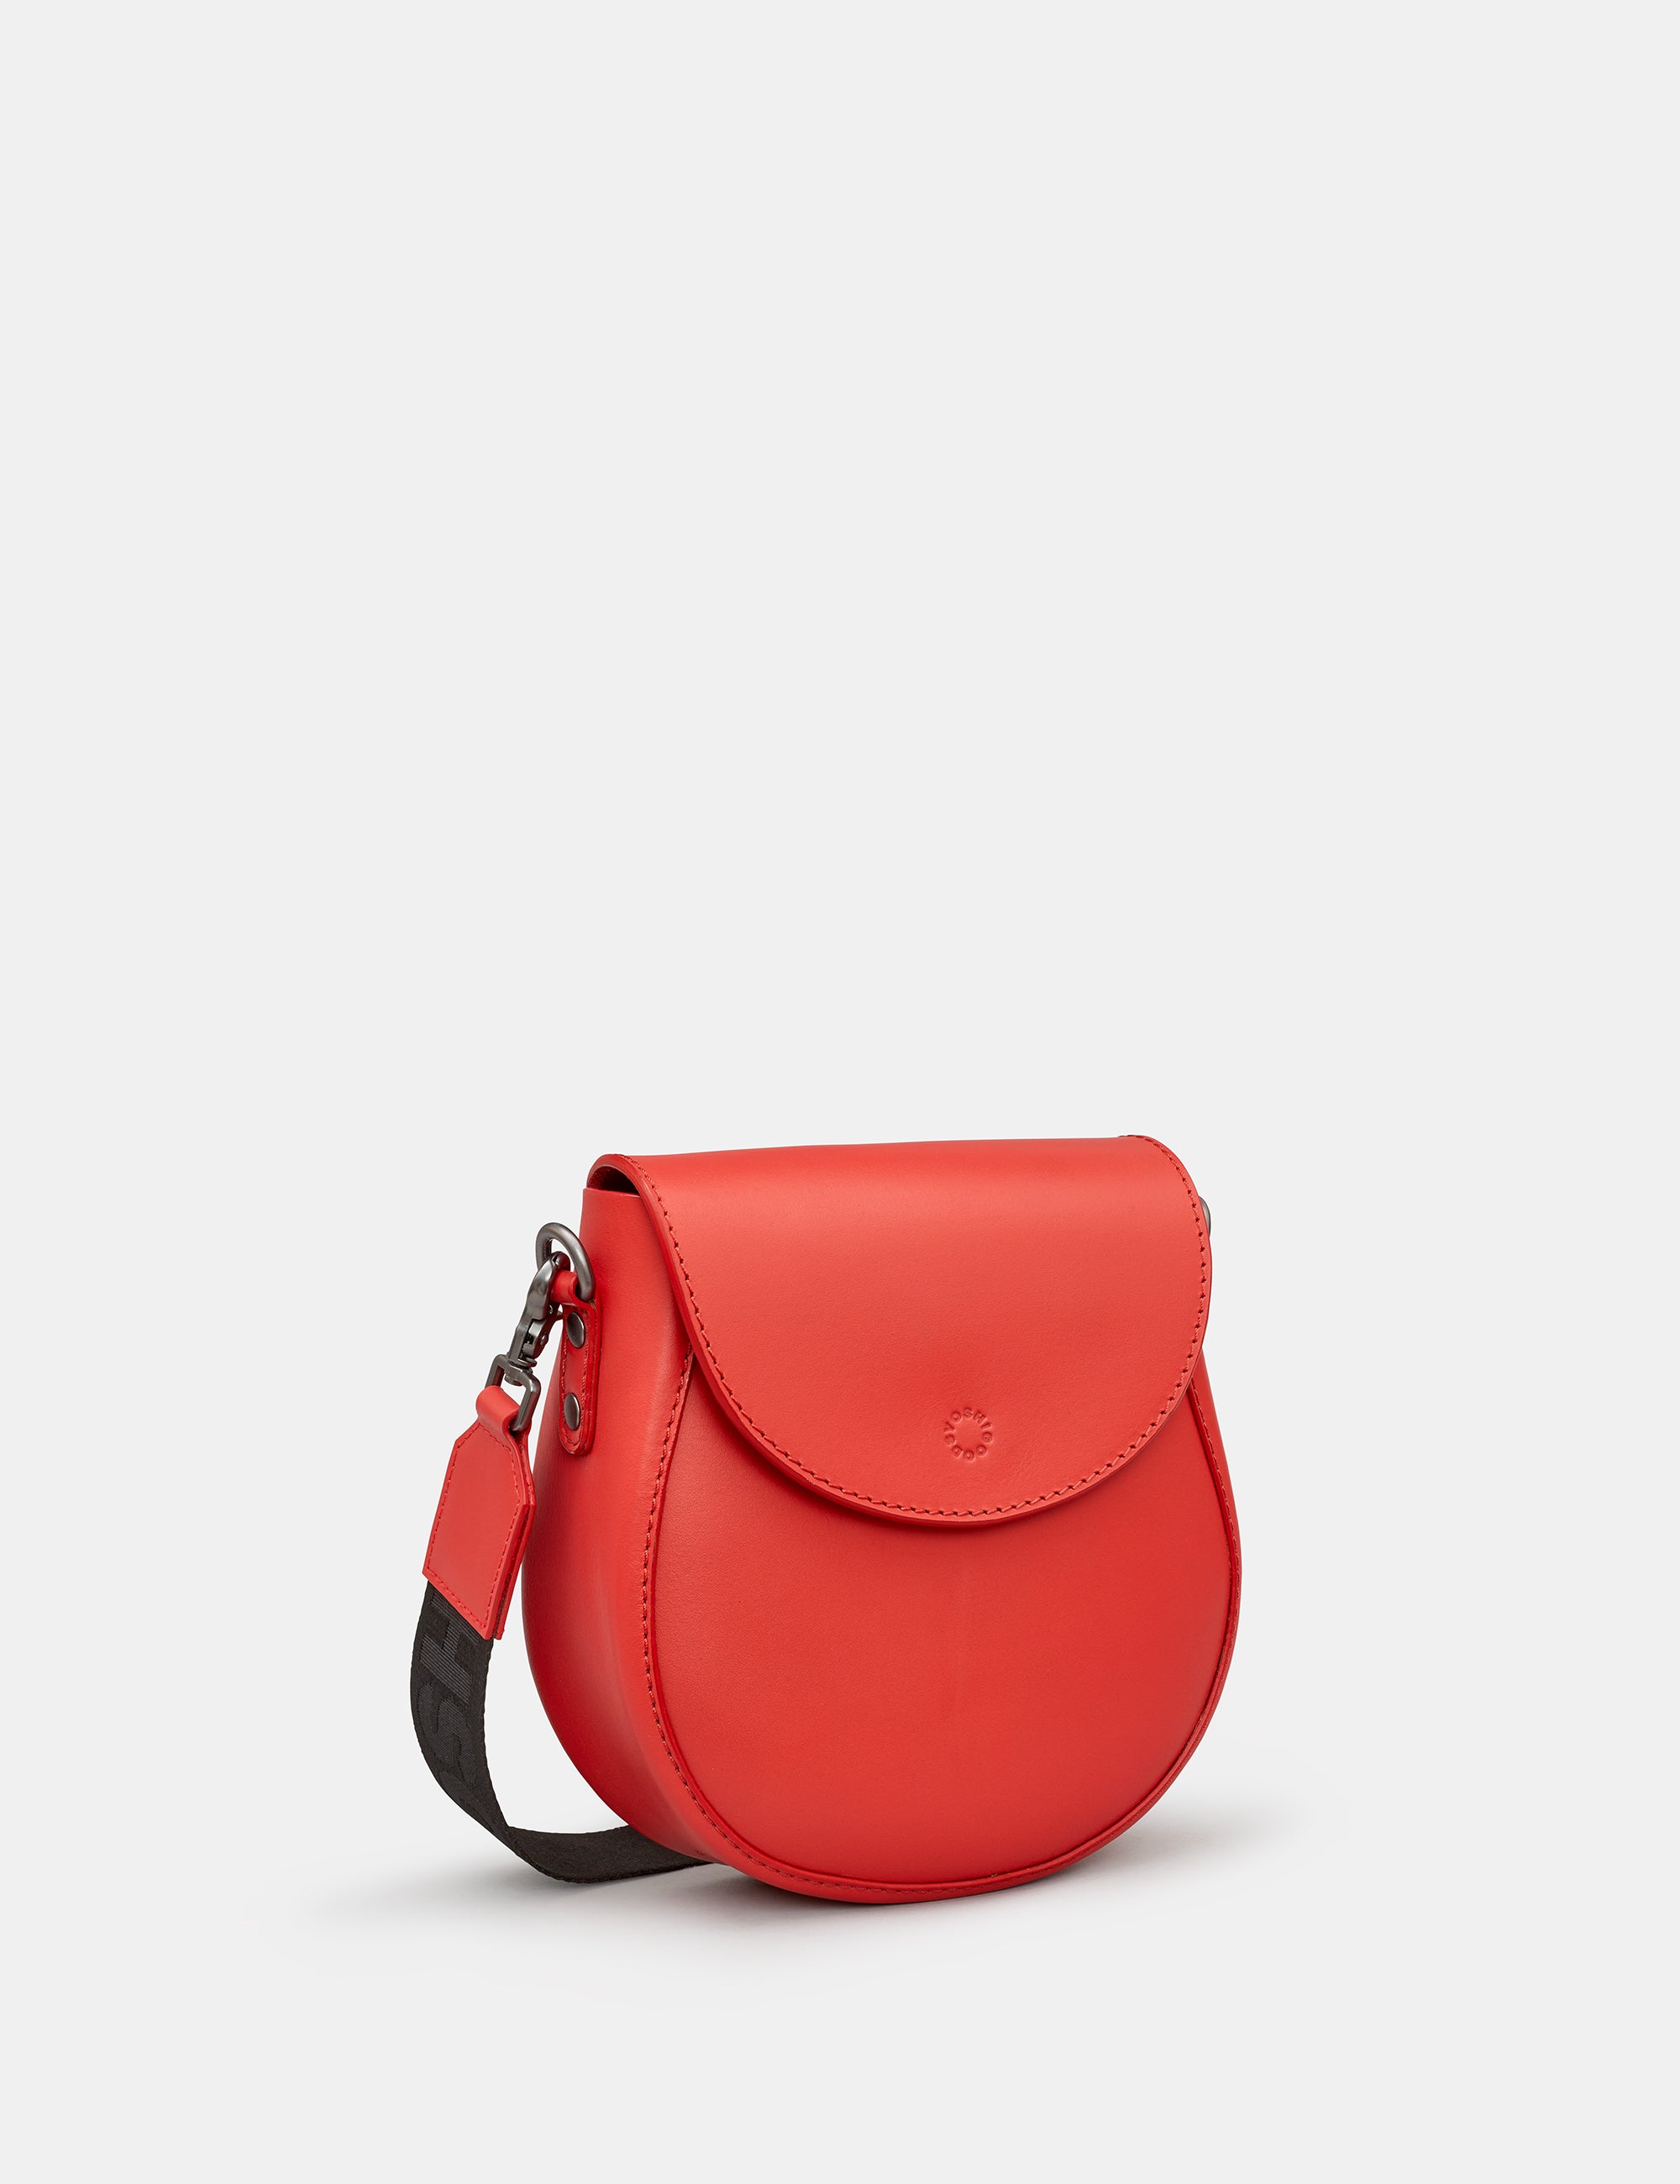 Chawton Red Leather Cross Body Satchel Bag | Handbag by Yoshi ...